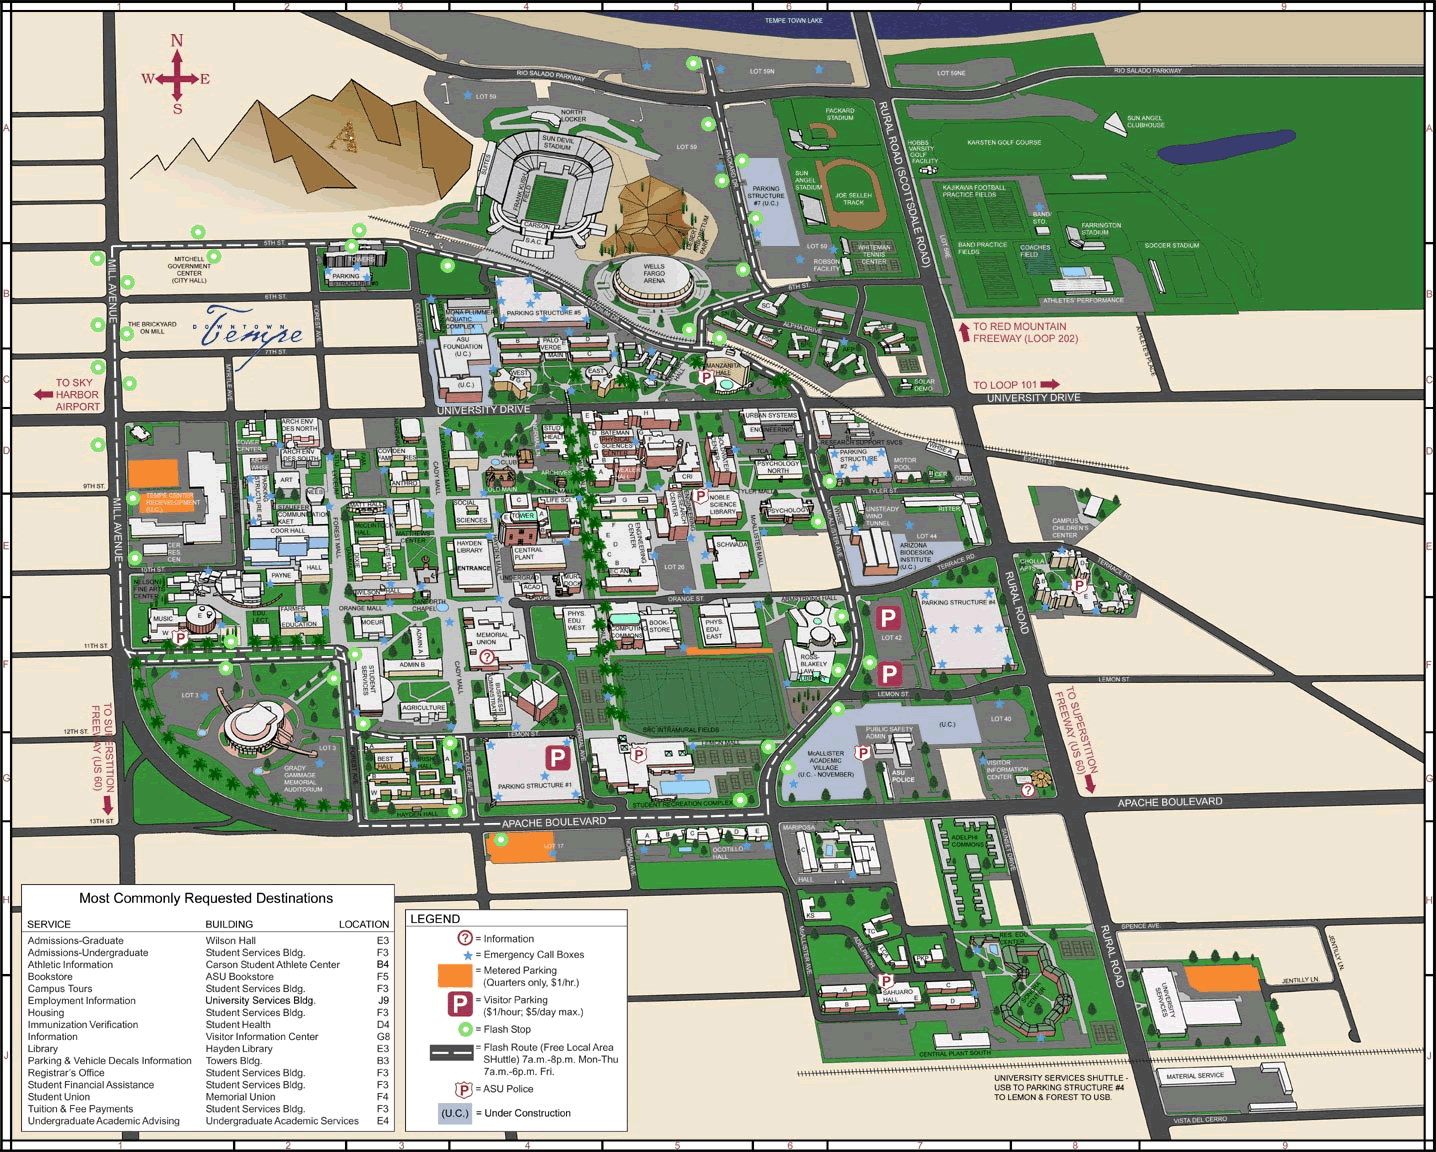 Asu Stadium Parking Map